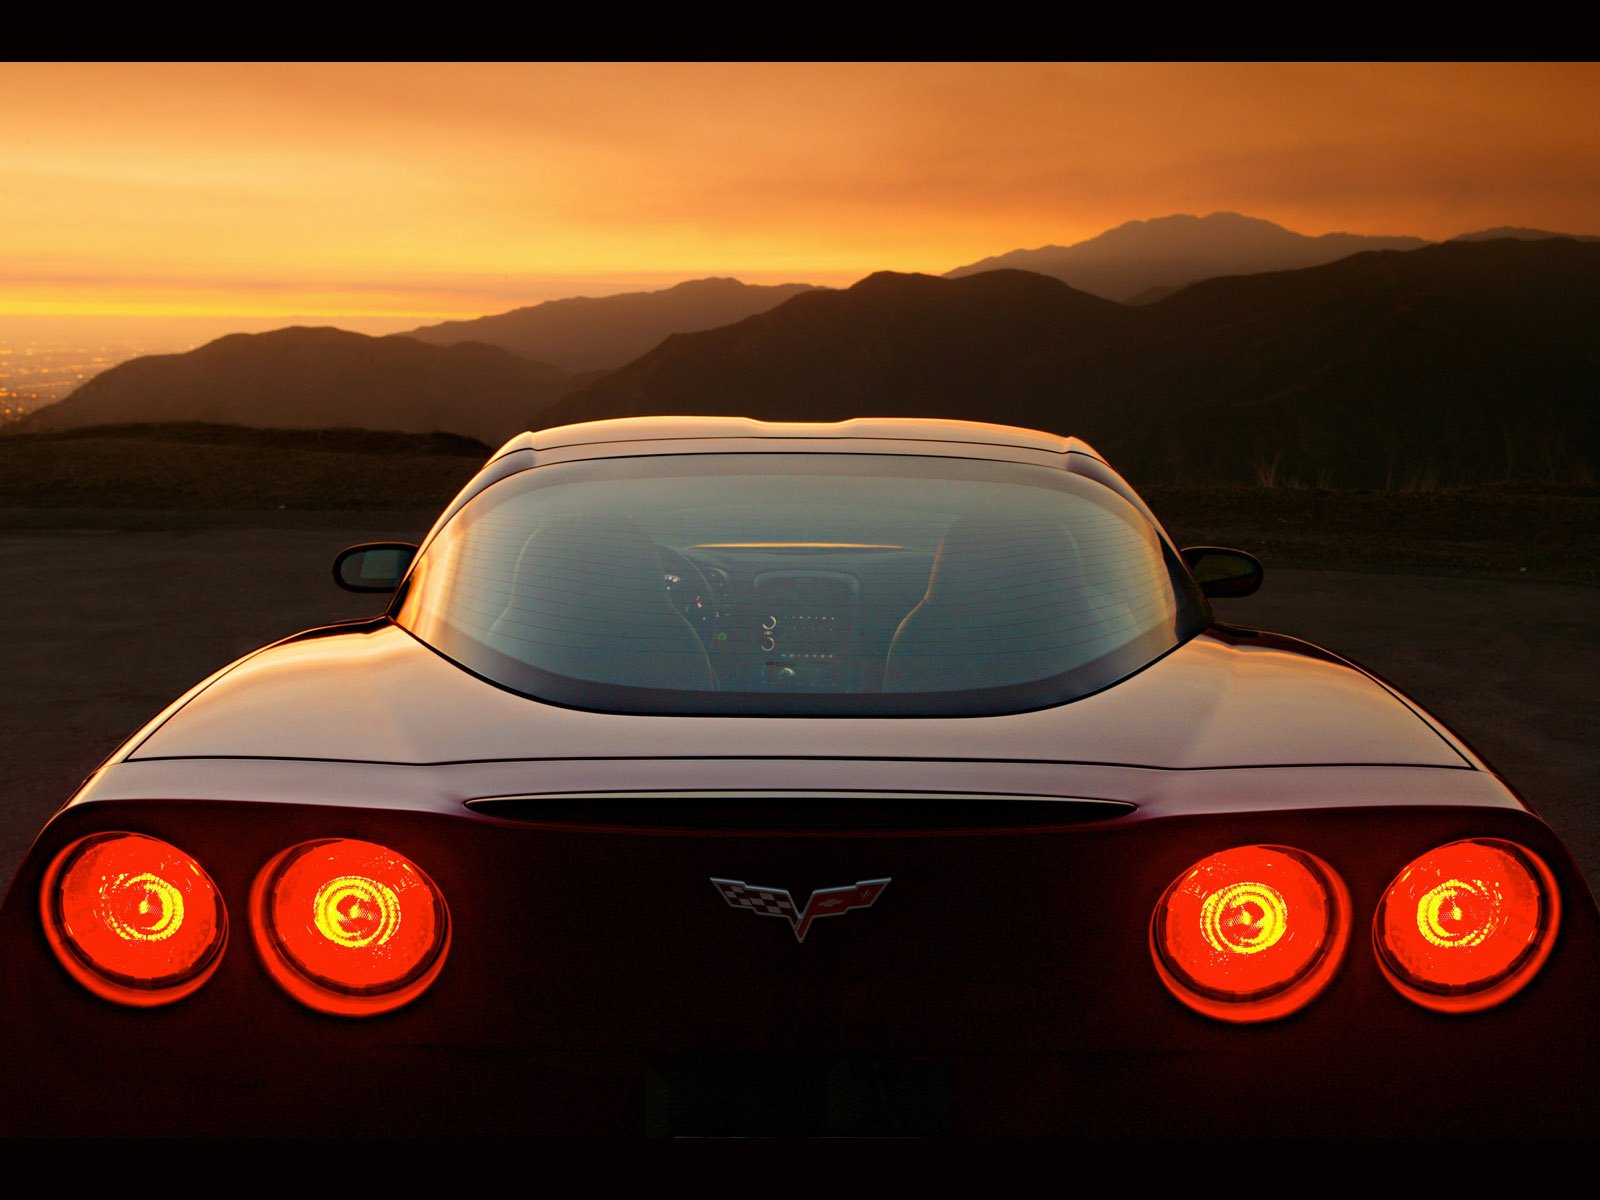 Red Corvette speeding on a scenic road.